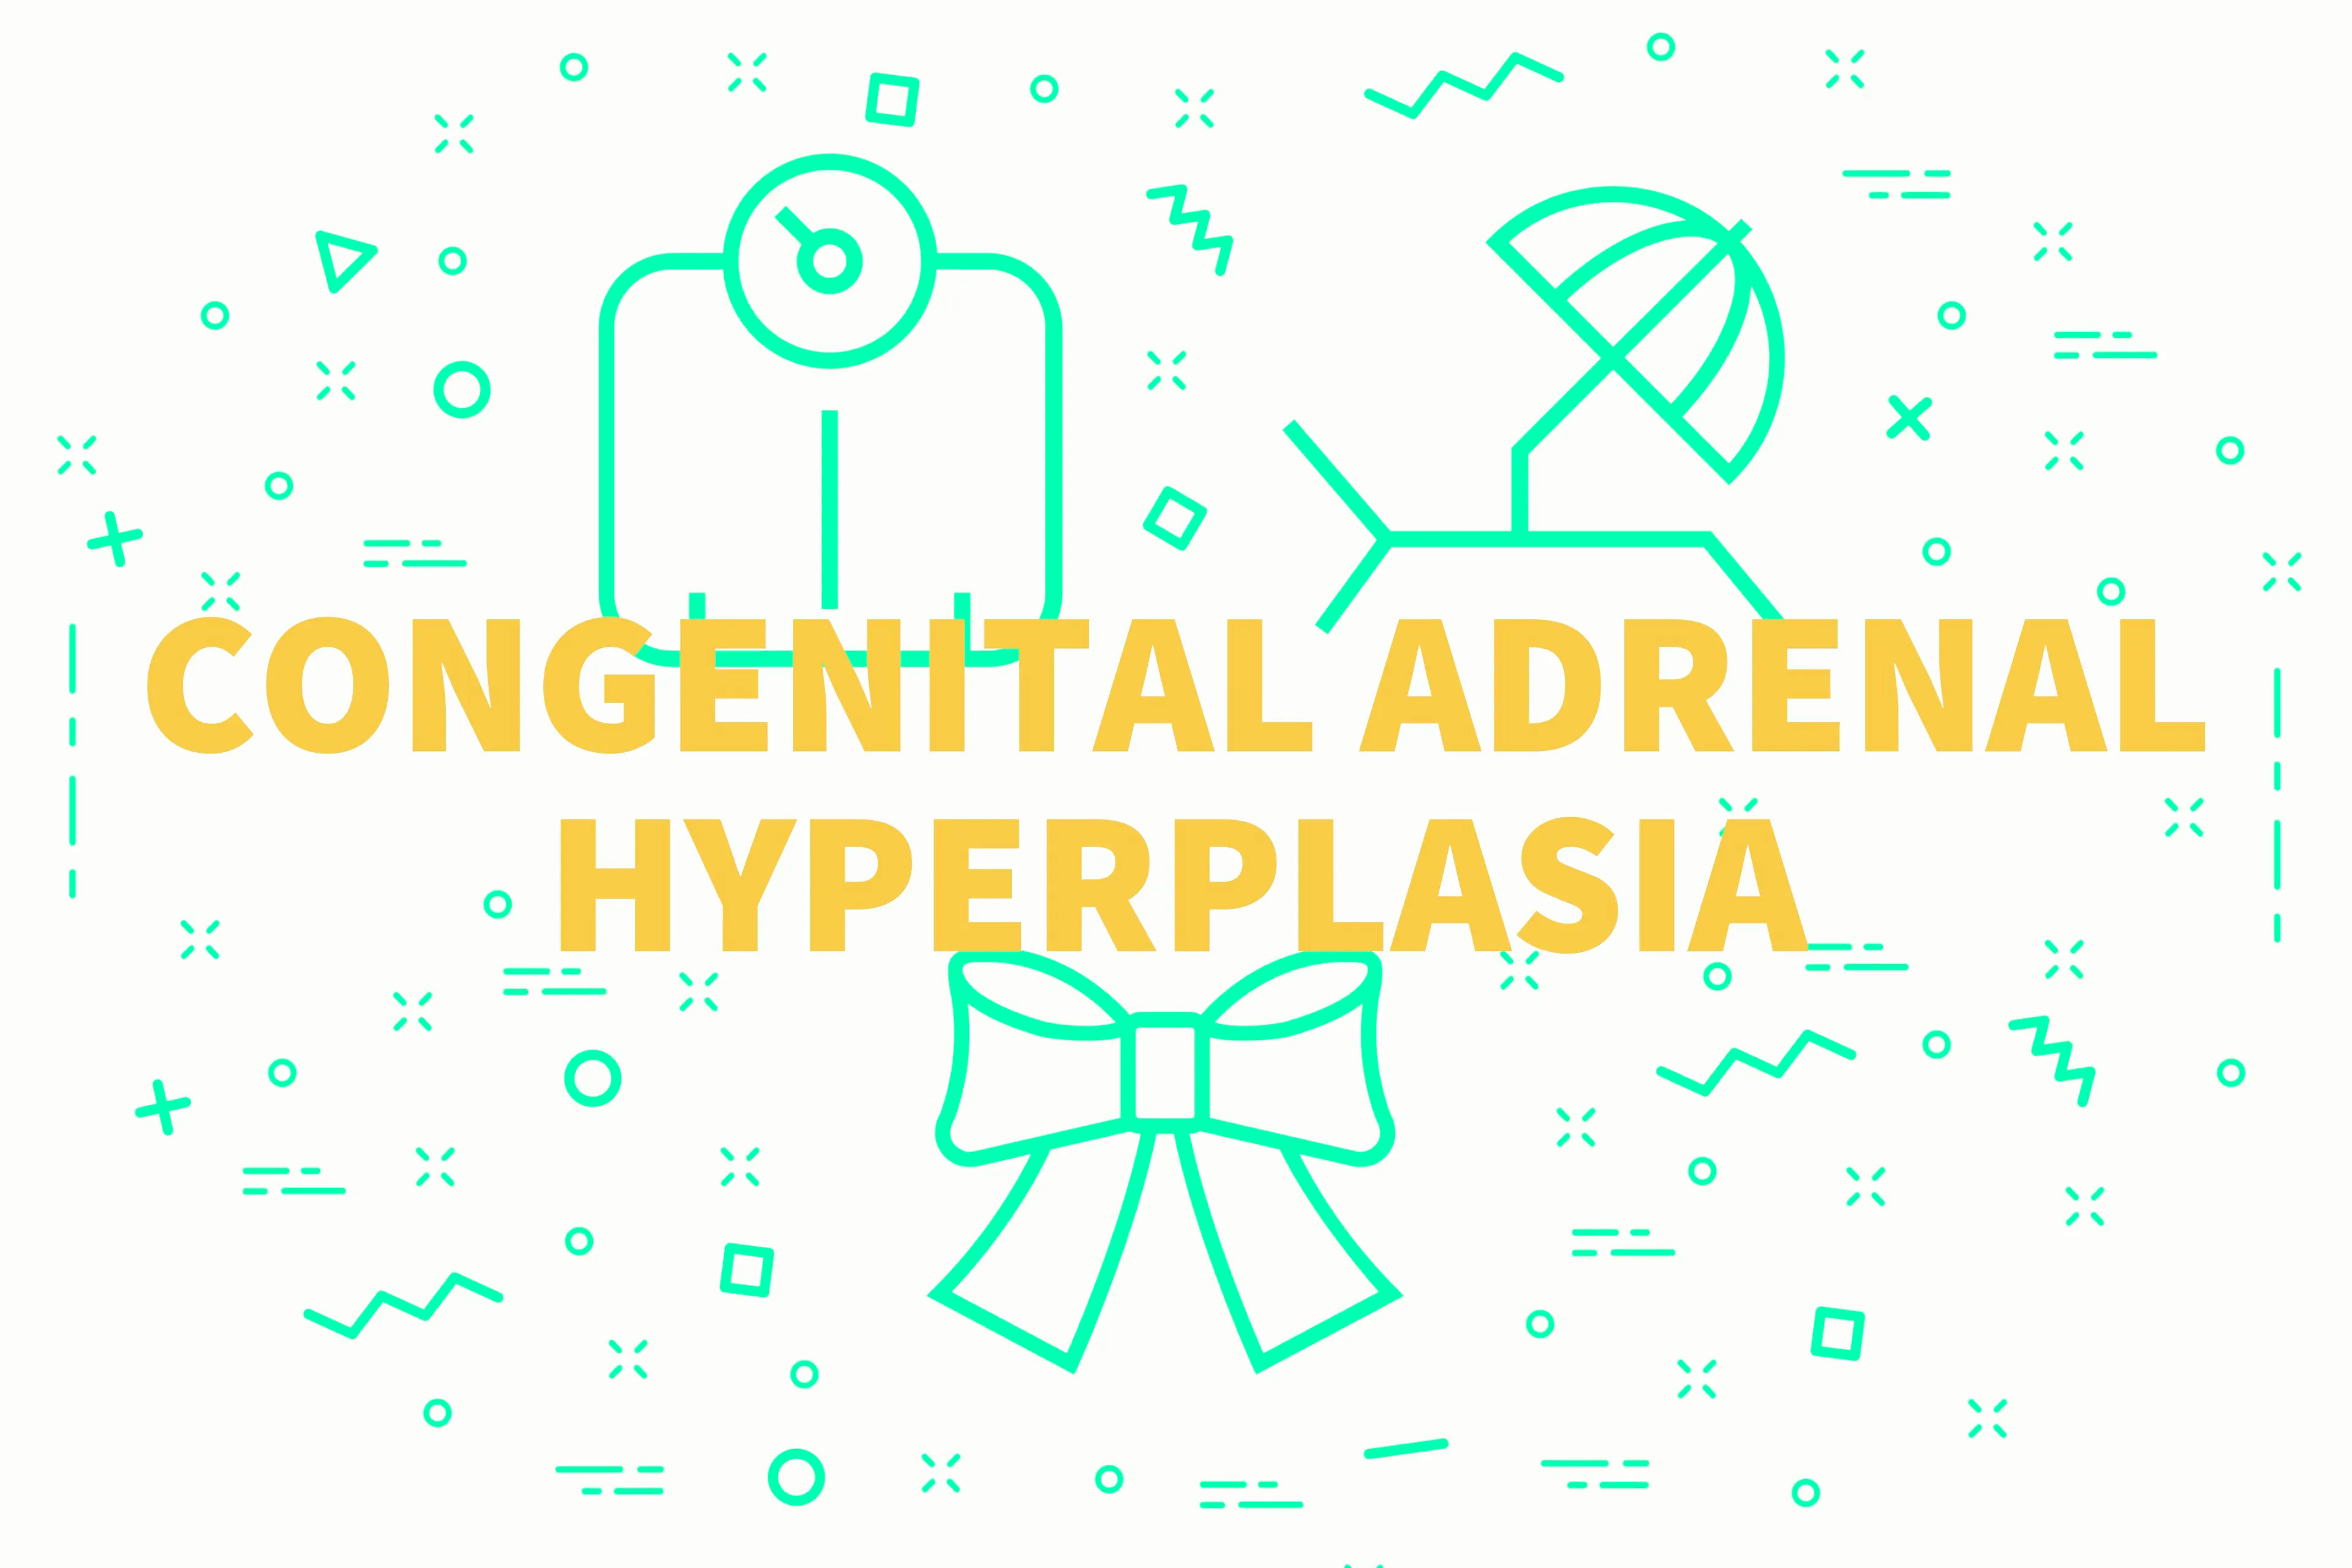 Crinecerfontsafe, effective in treating children with congenital adrenal hyperplasia | Image Credit: © OpturaDesign - © OpturaDesign - stock.adobe.com.